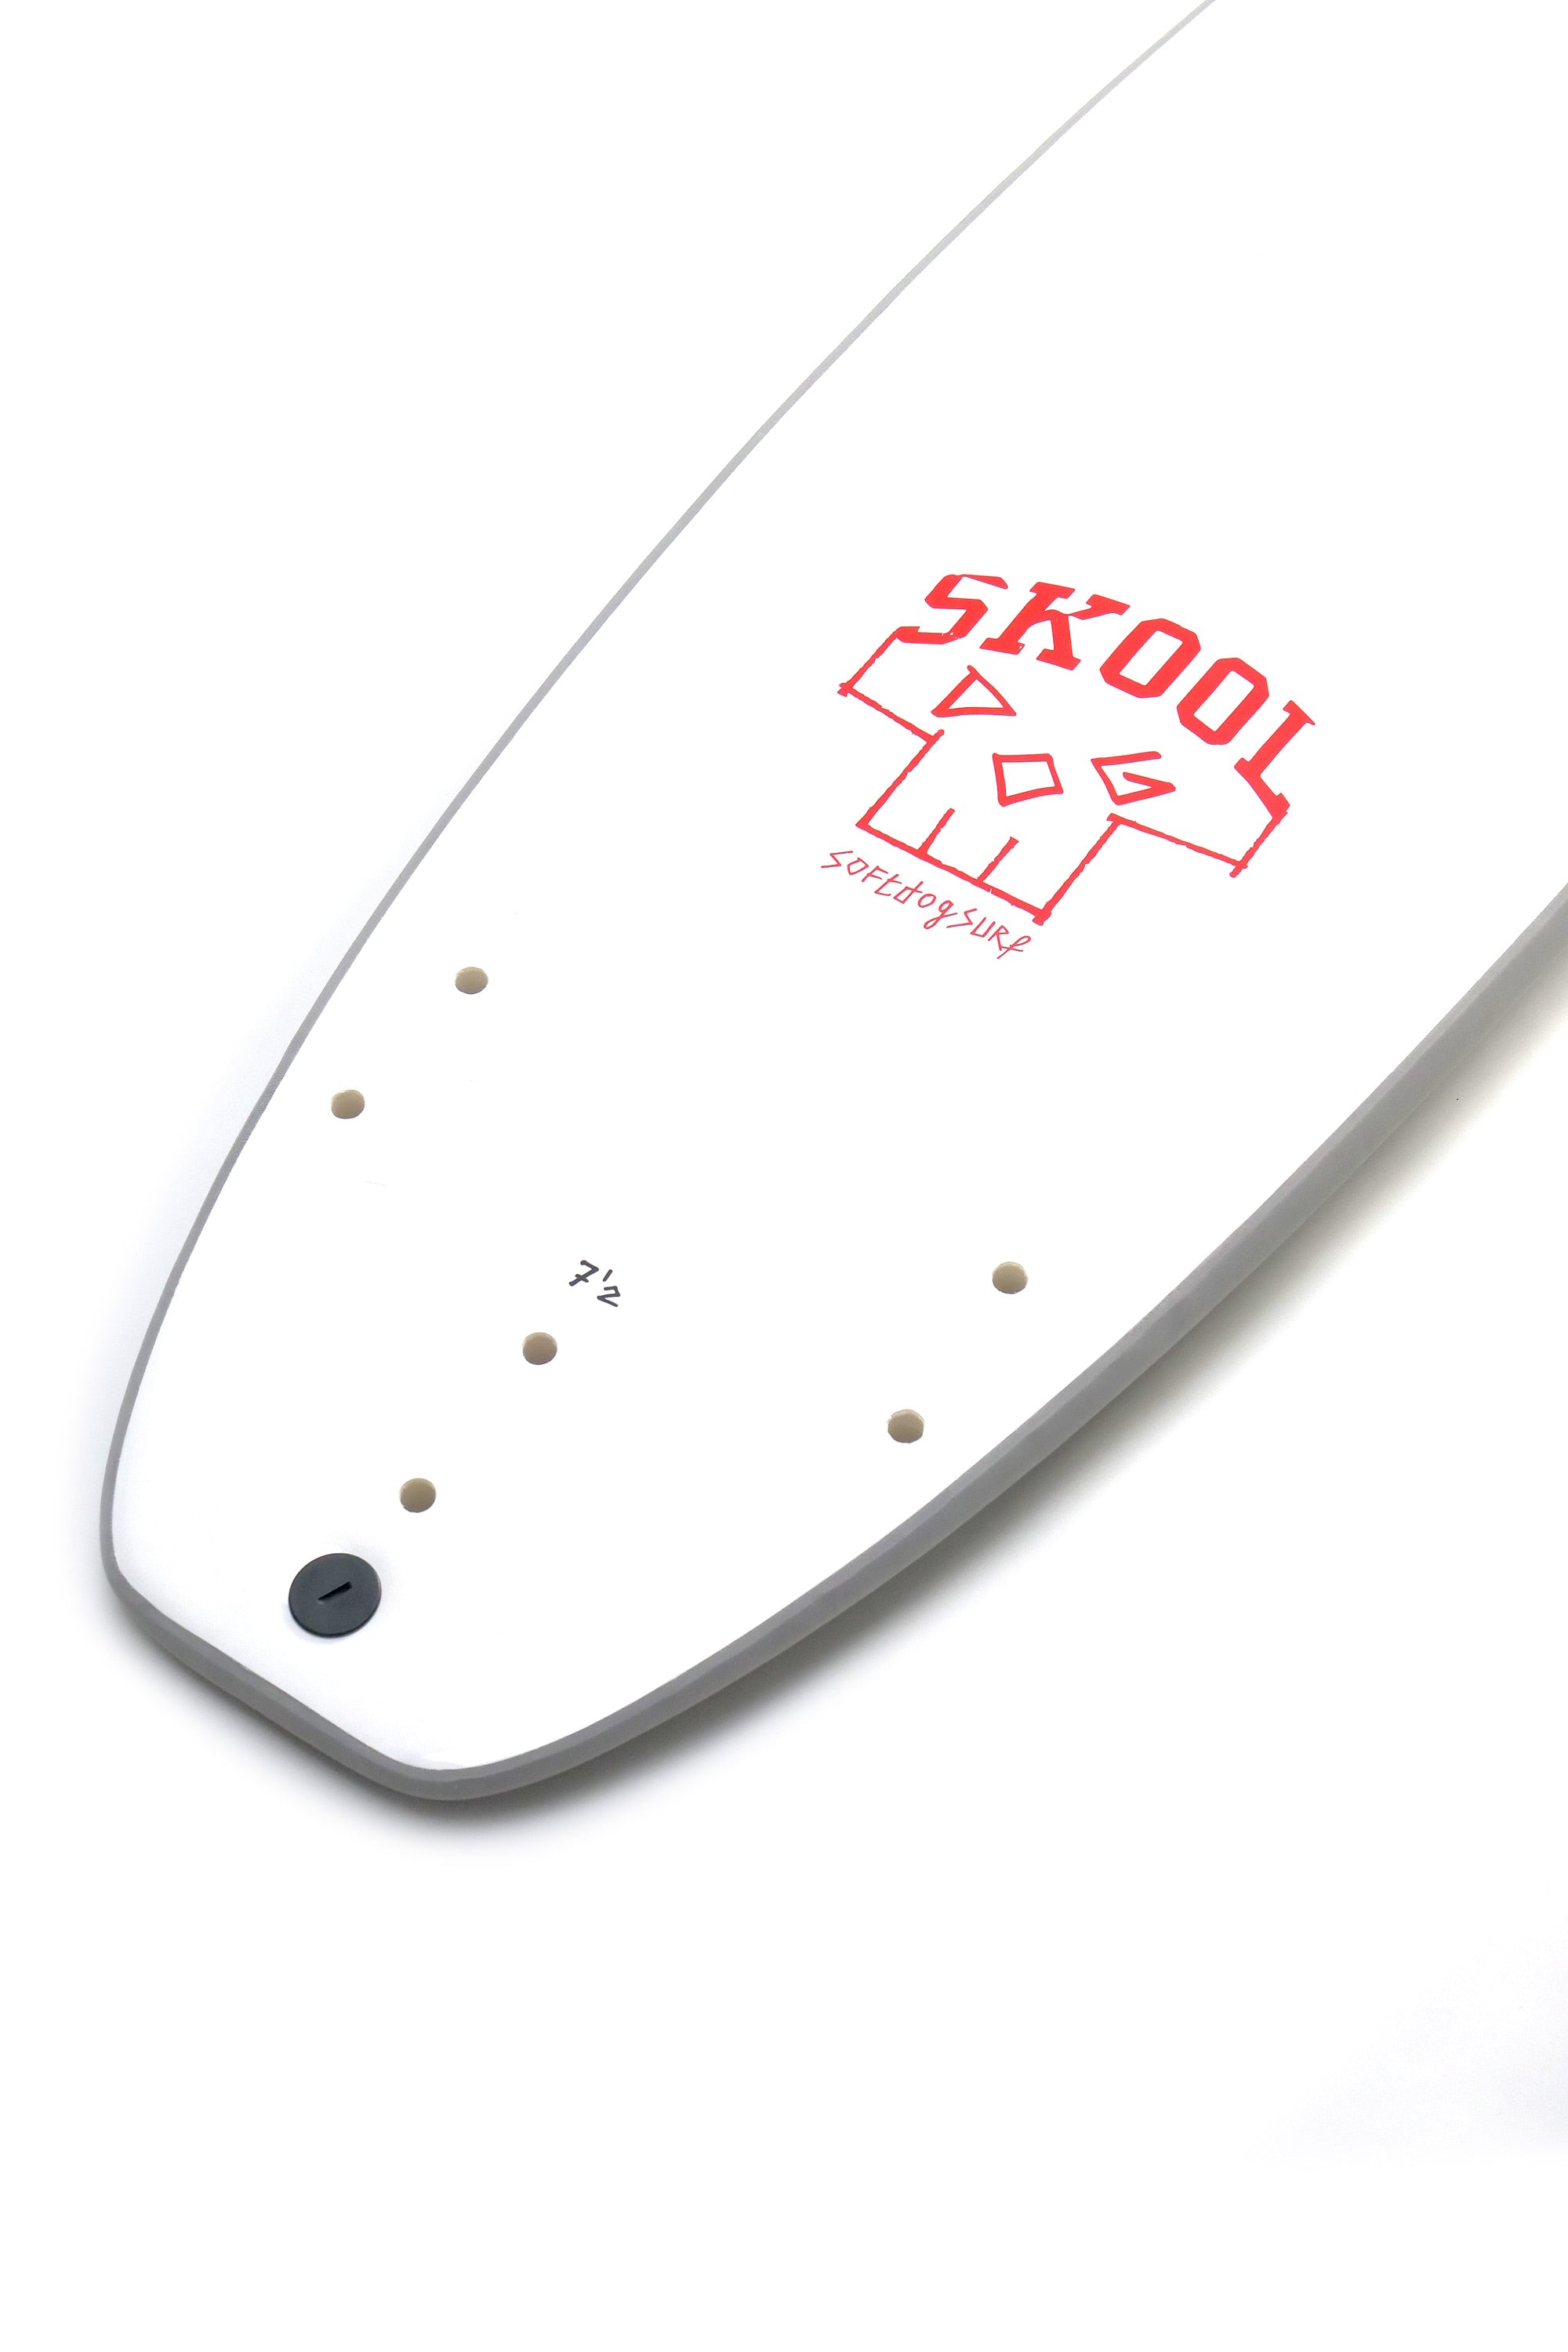 Skooldog 6'7 | Soft Top Surfboard with EVA rail